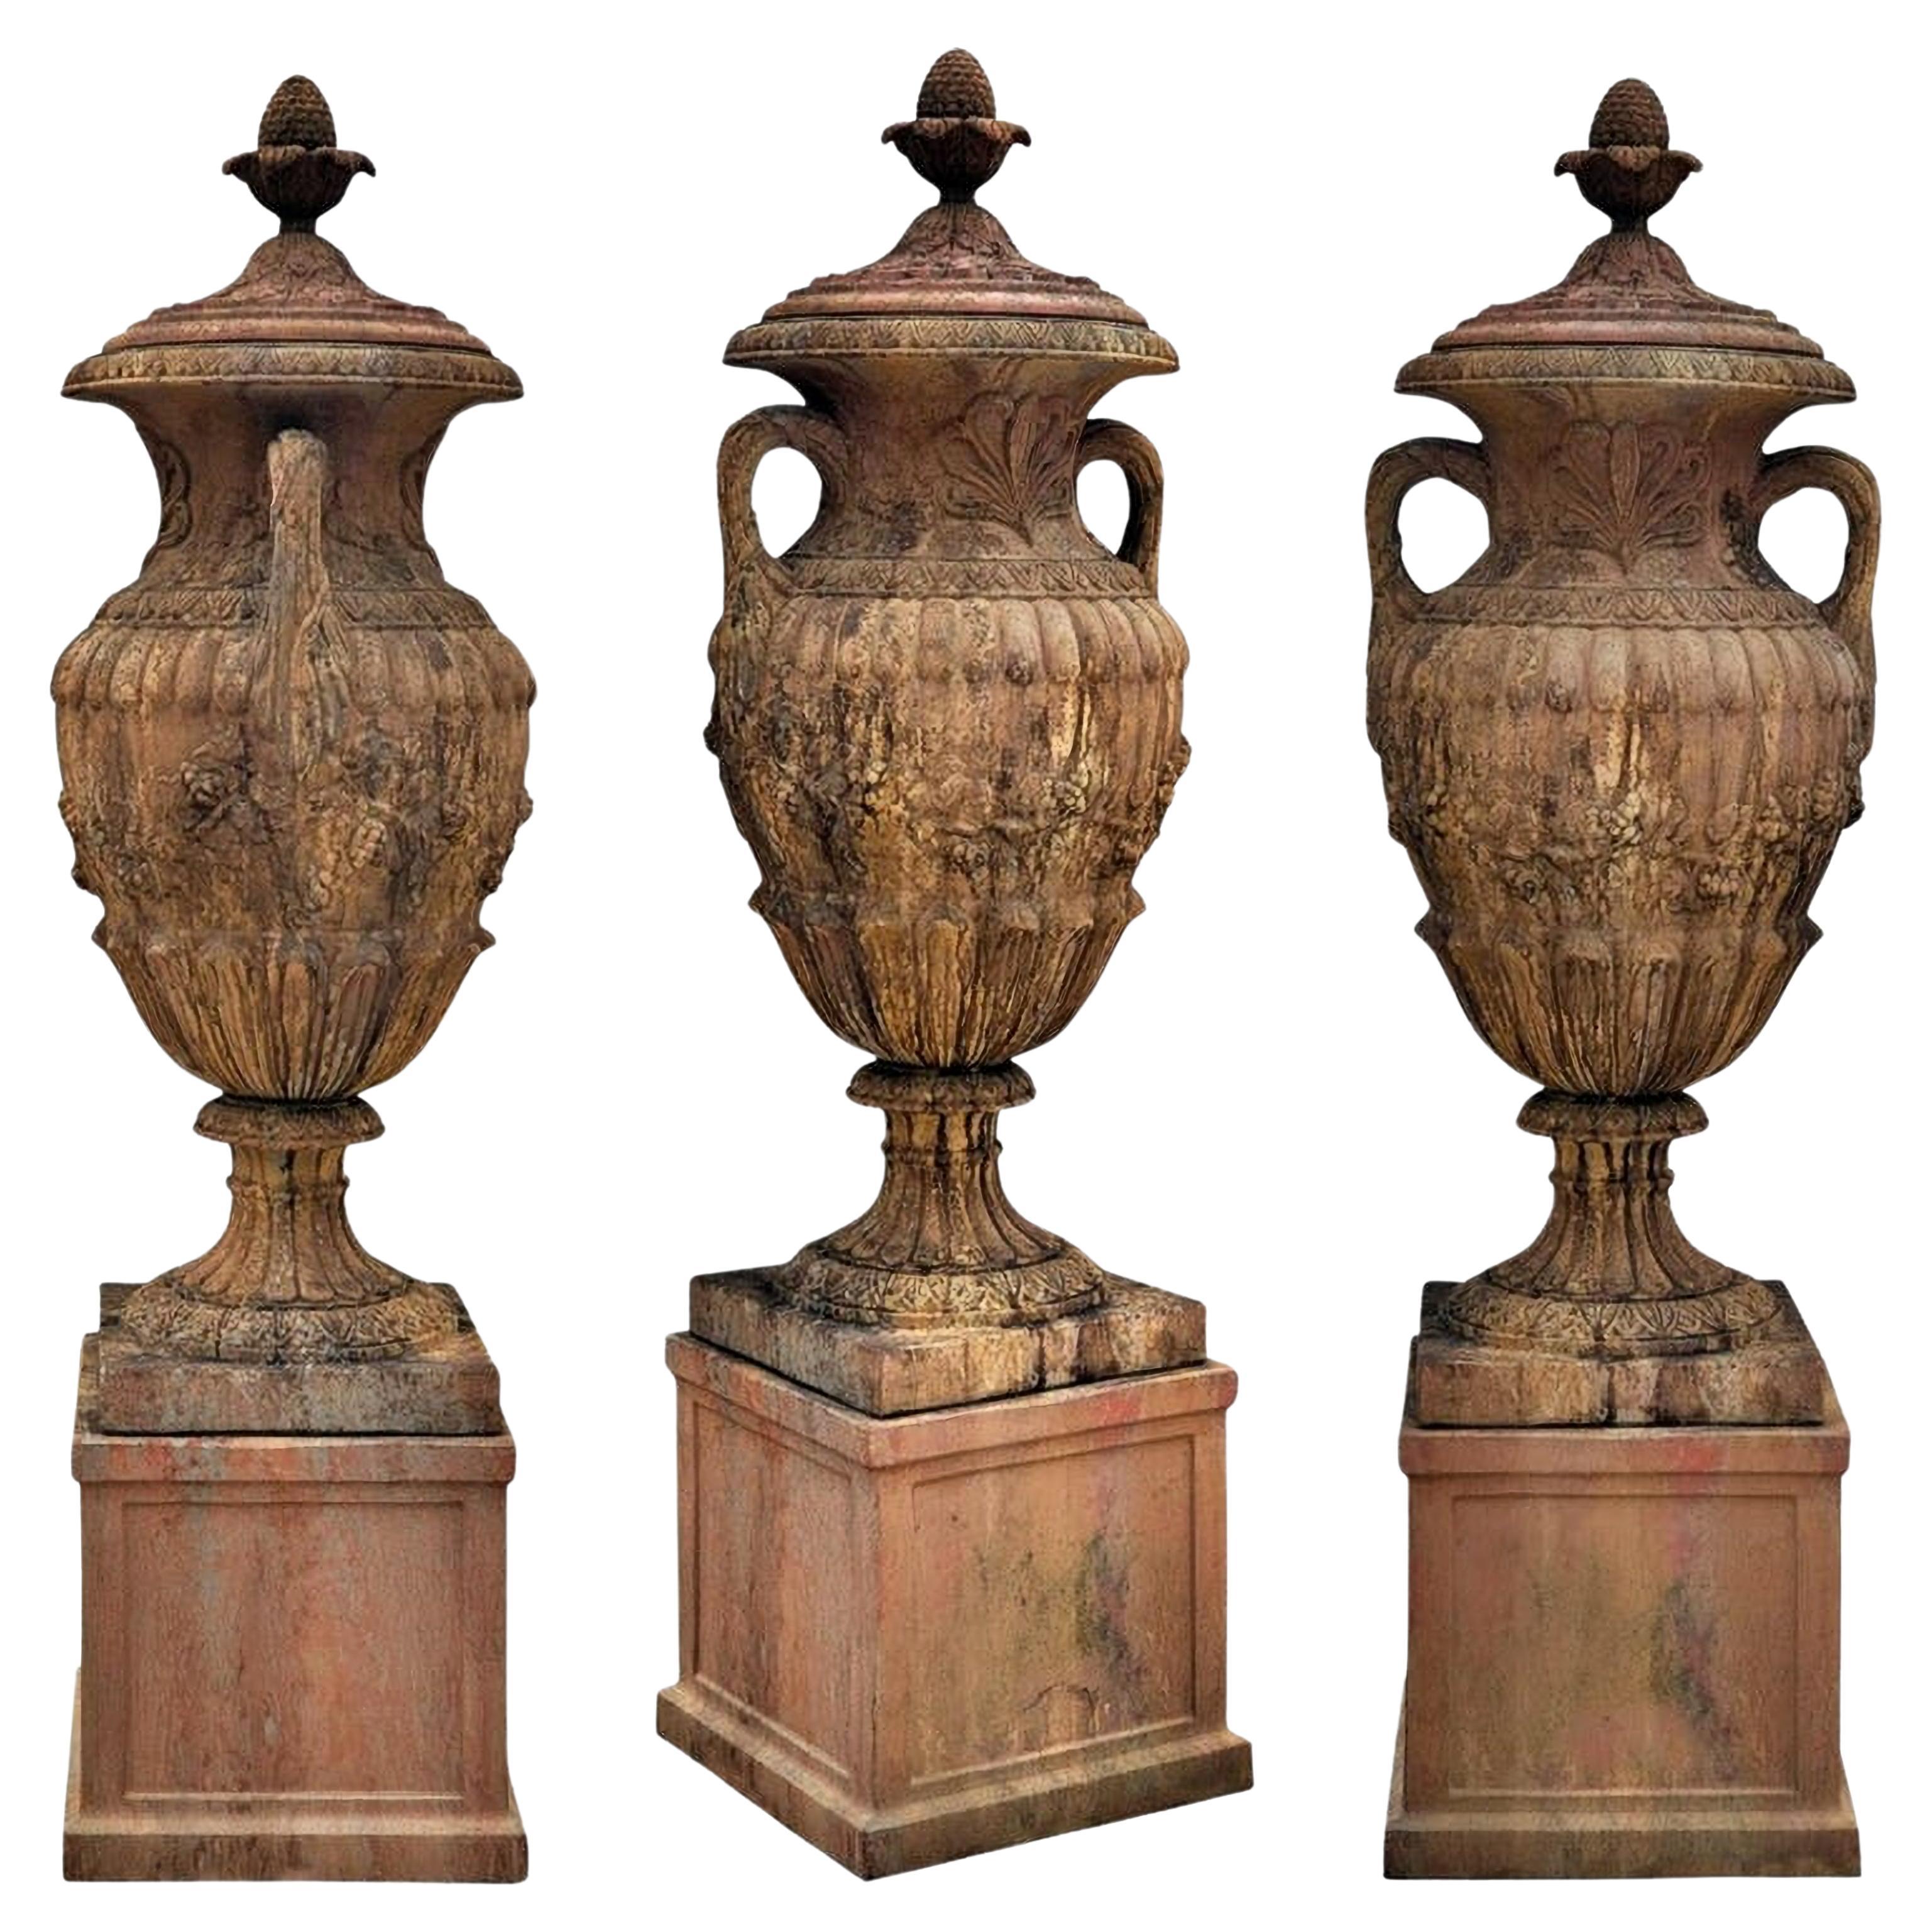 Große ornamentale Terrakotta-Vase mit Sockel aus dem frühen 20. Jahrhundert